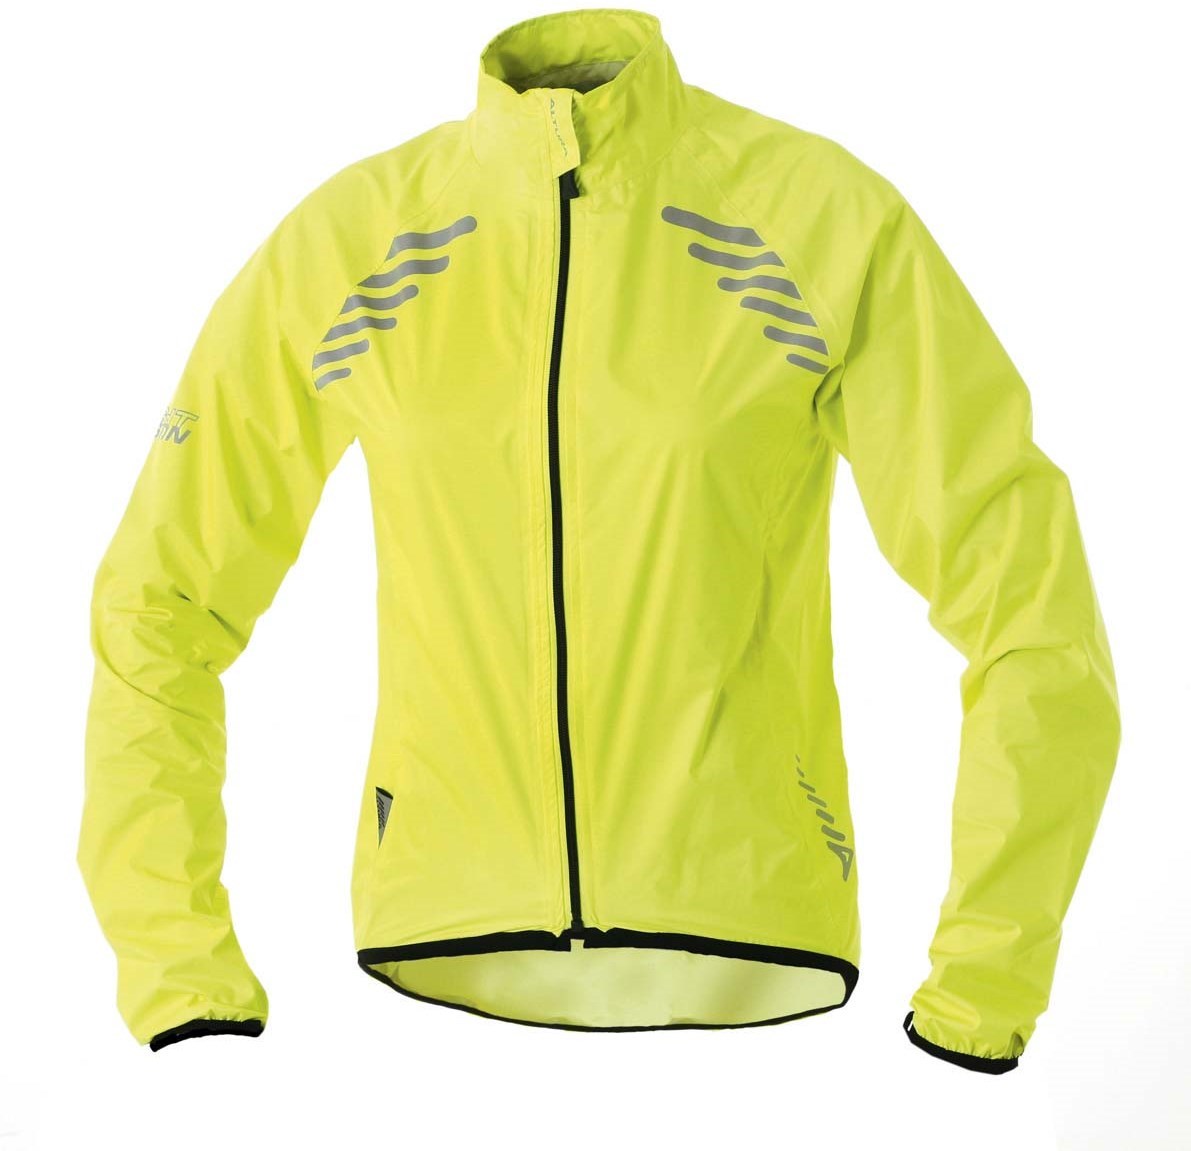 Altura Night Vision Flite Womens Waterproof Cycling Jacket 2012 product image